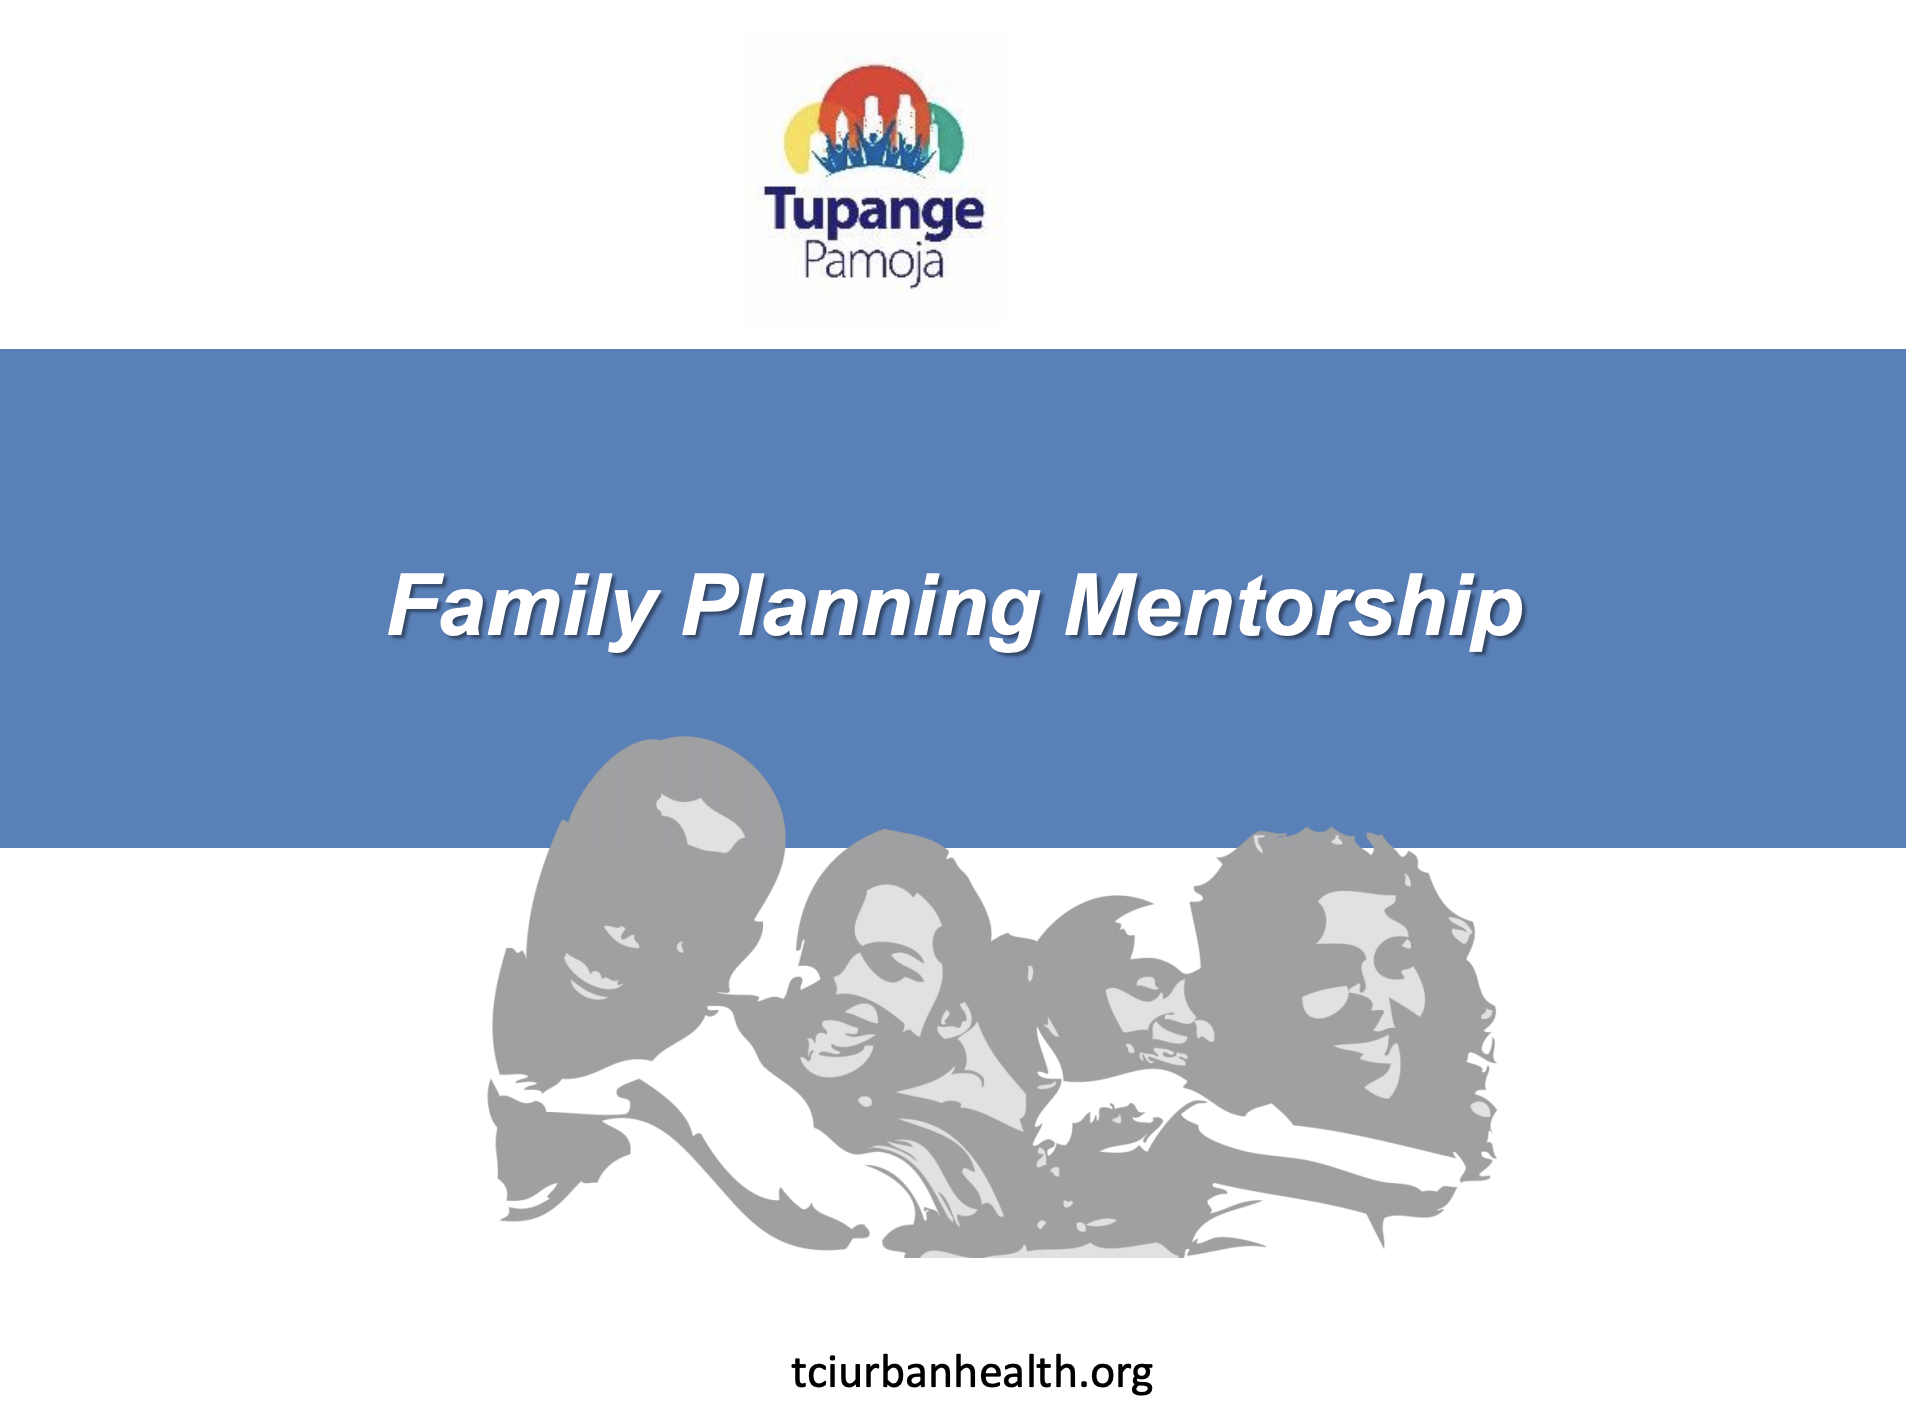 Family Planning Mentorship